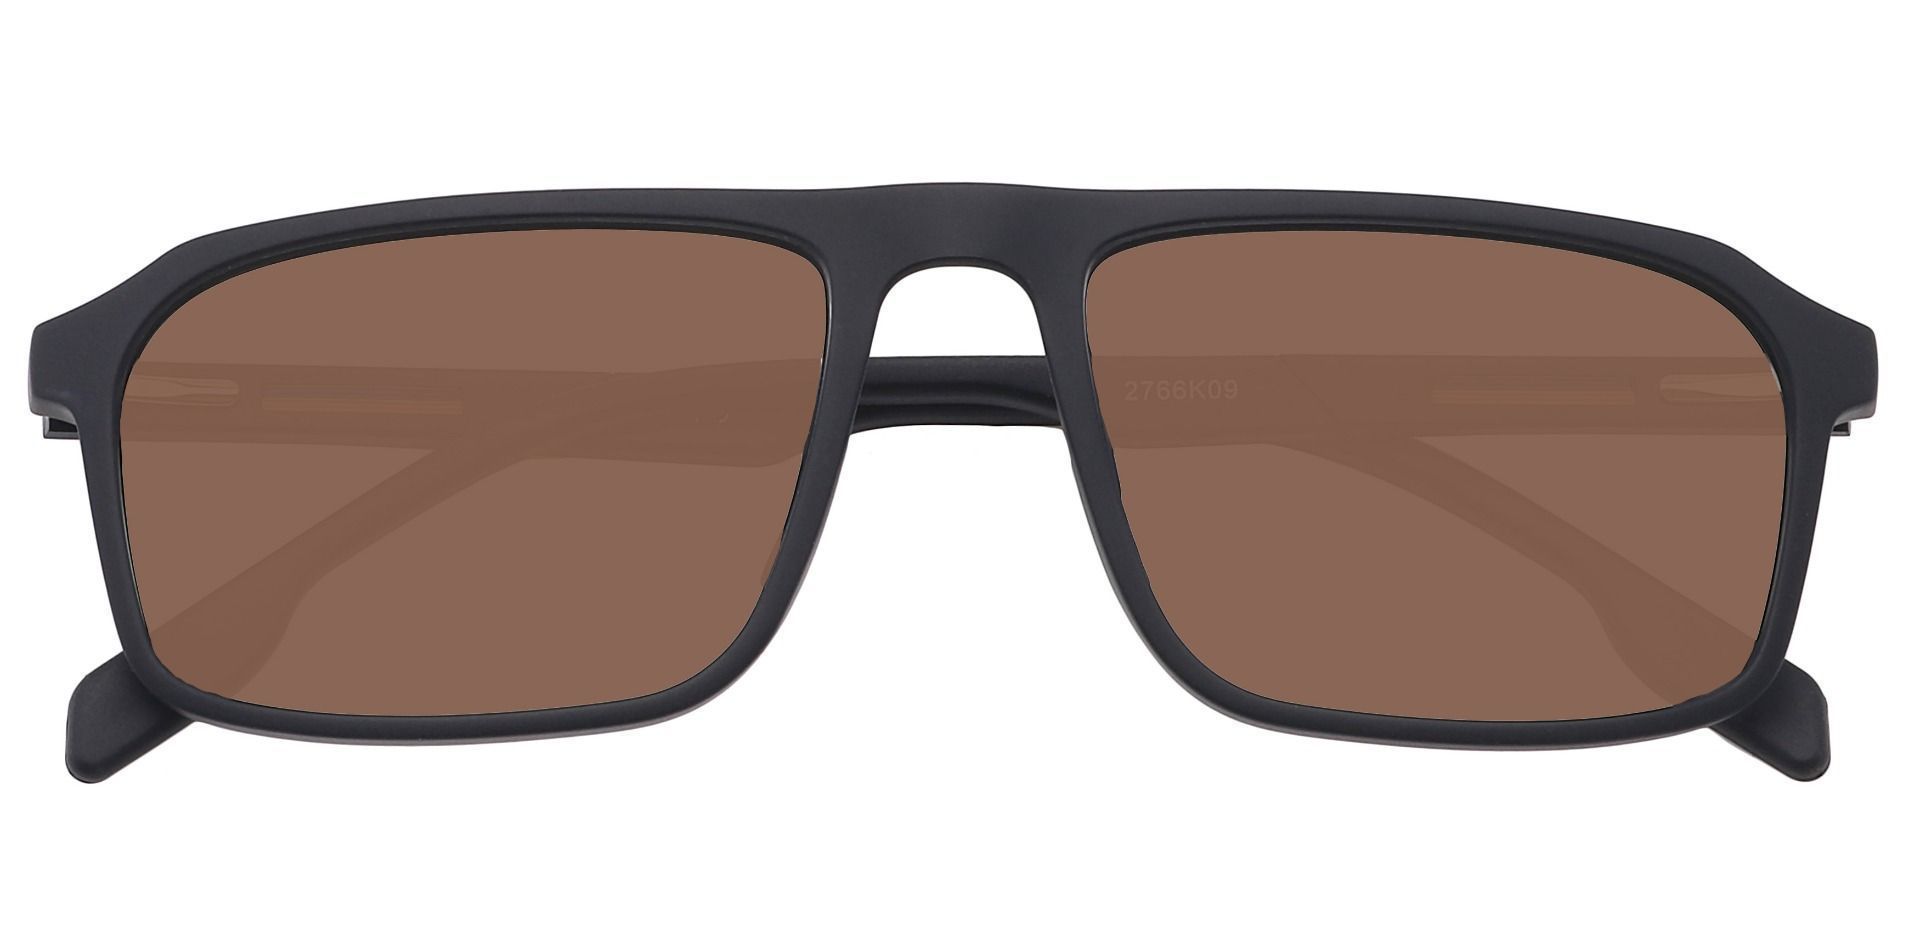 Hector Rectangle Prescription Sunglasses - Black Frame With Brown Lenses